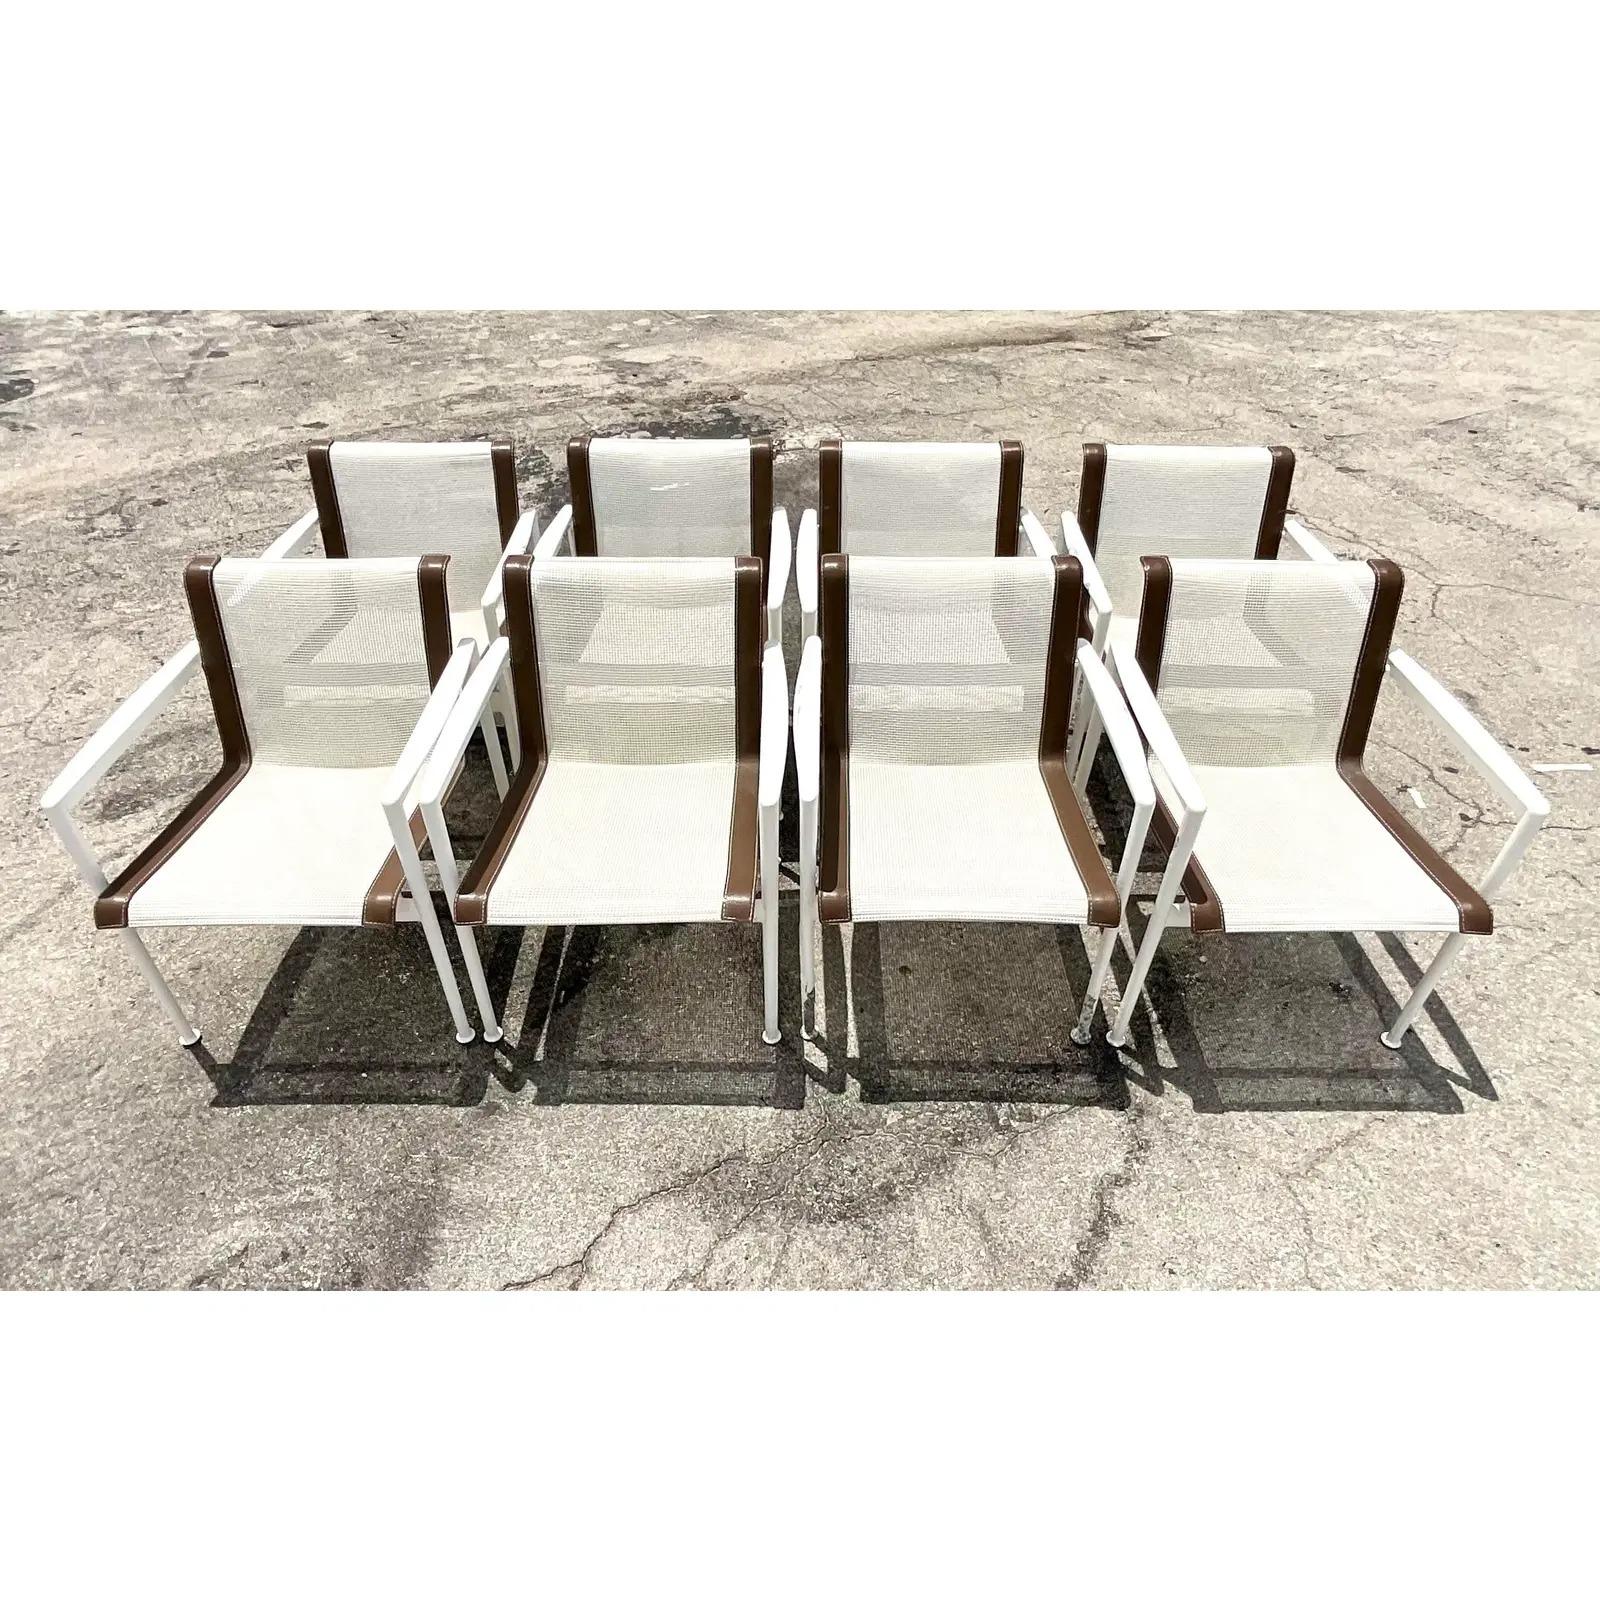 20th Century Vintage Midcentury Richard Schultz 1966 Series Dining Chairs - Set of 8